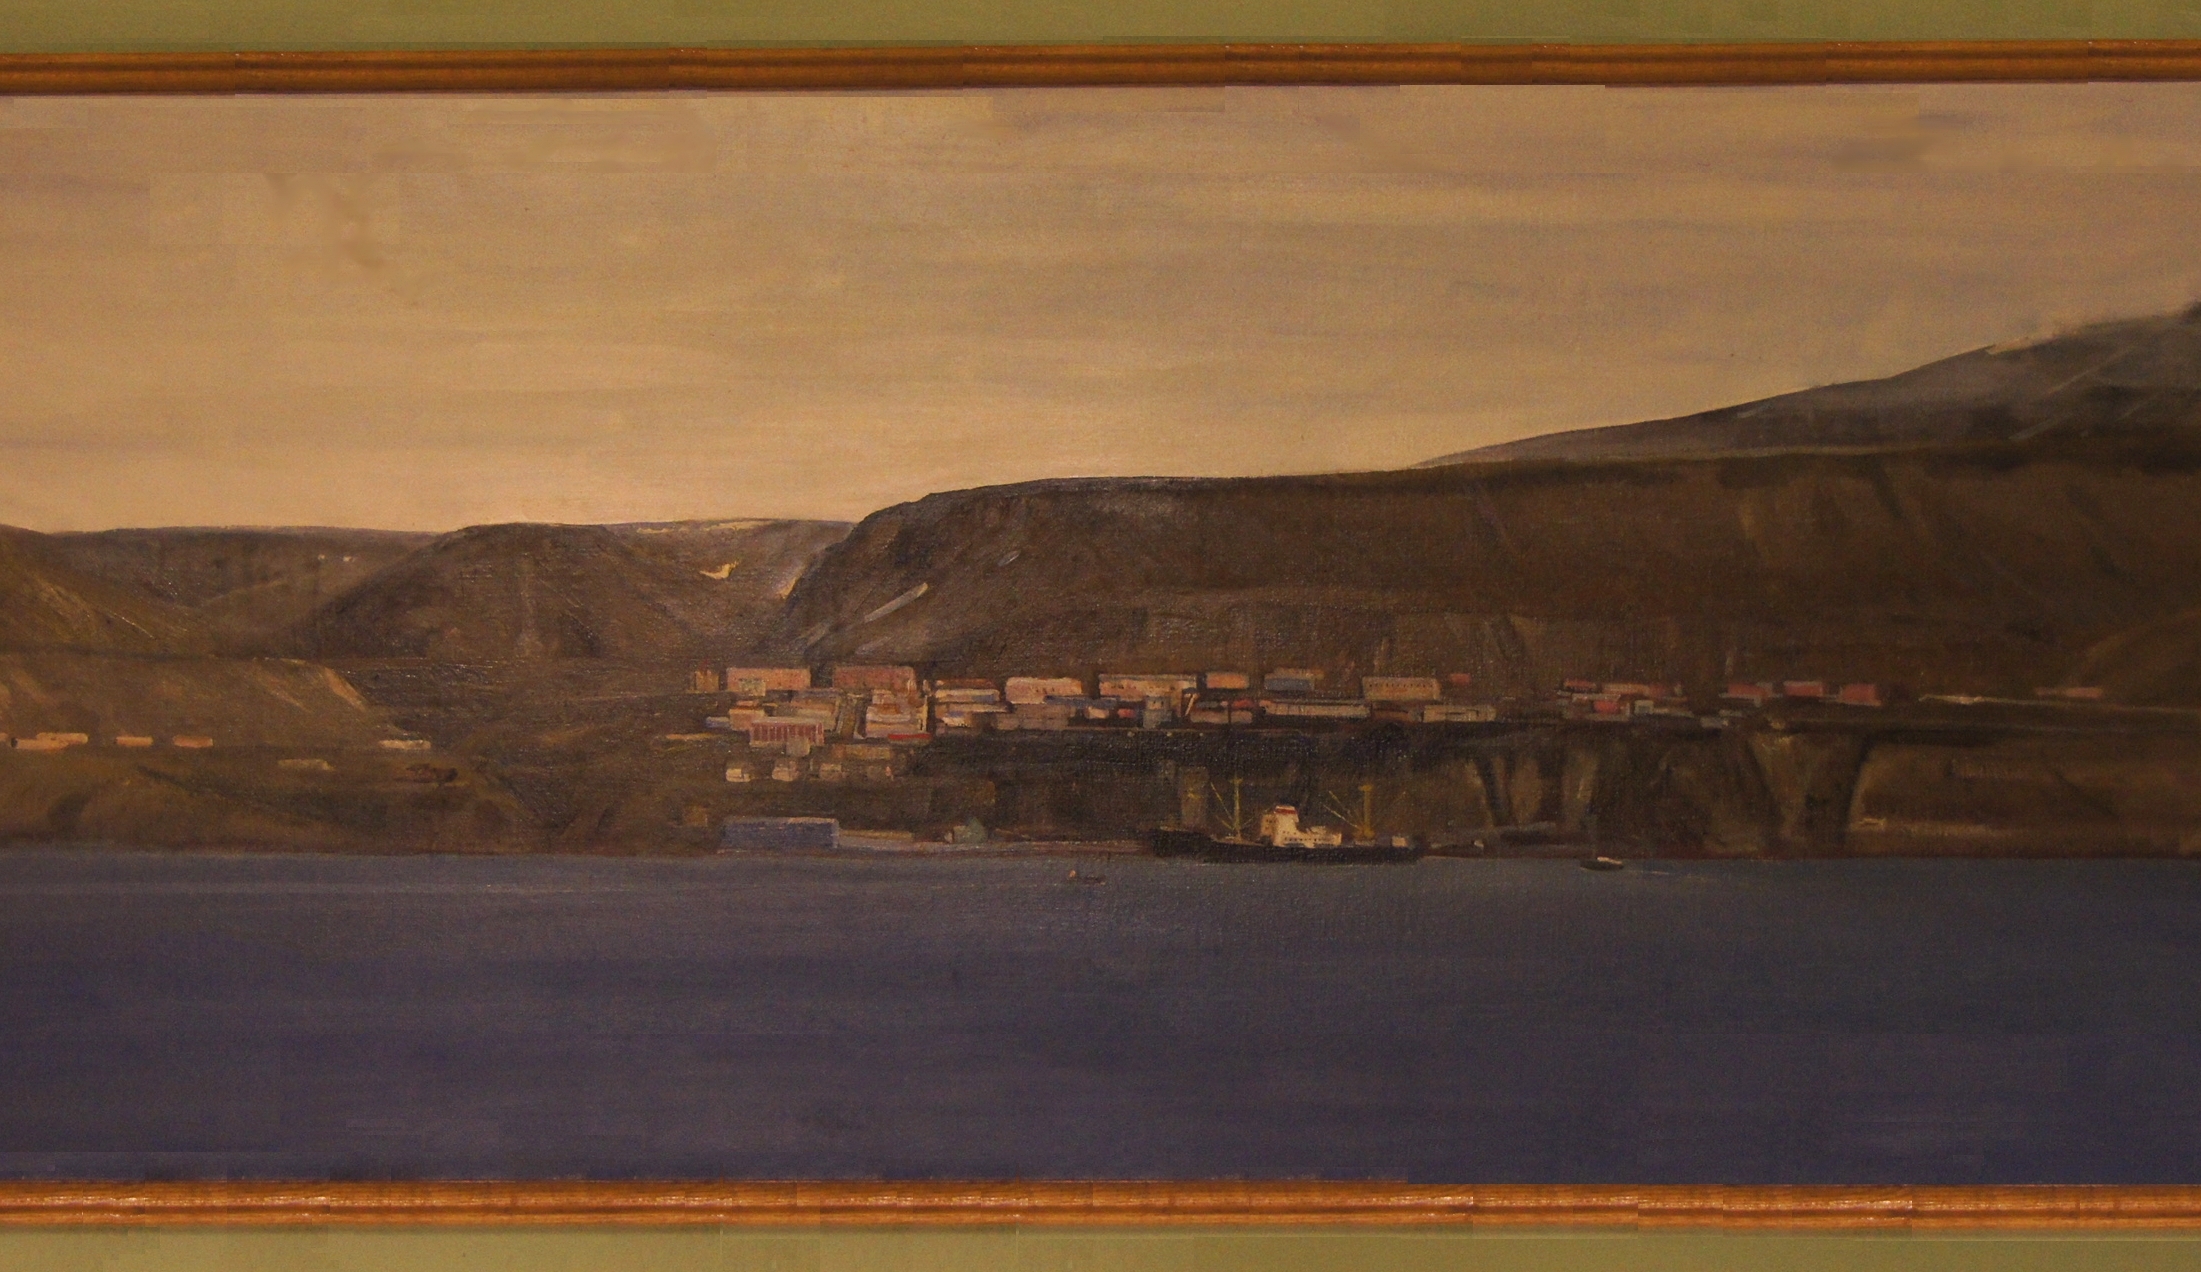 Painting historic Barentsburg